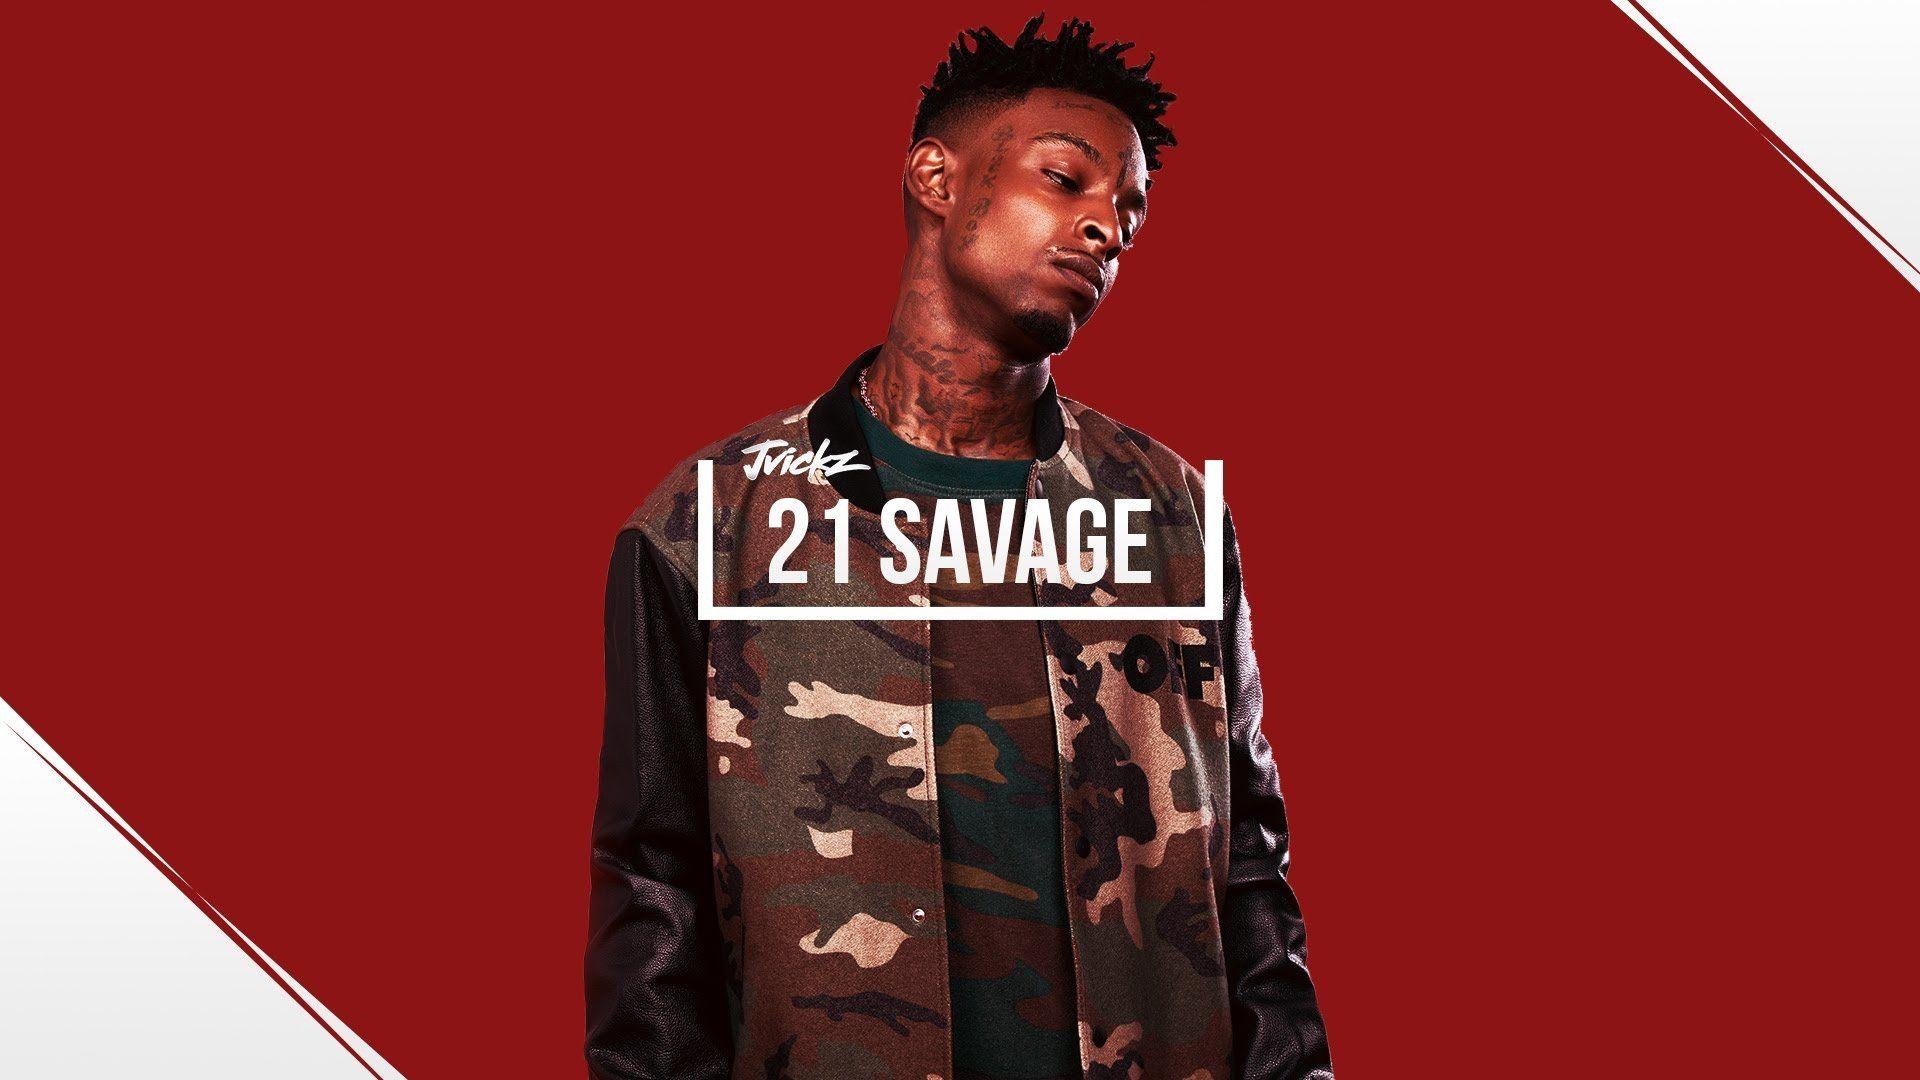 Savage Rapper Wallpaper Free 21 Savage Rapper Background